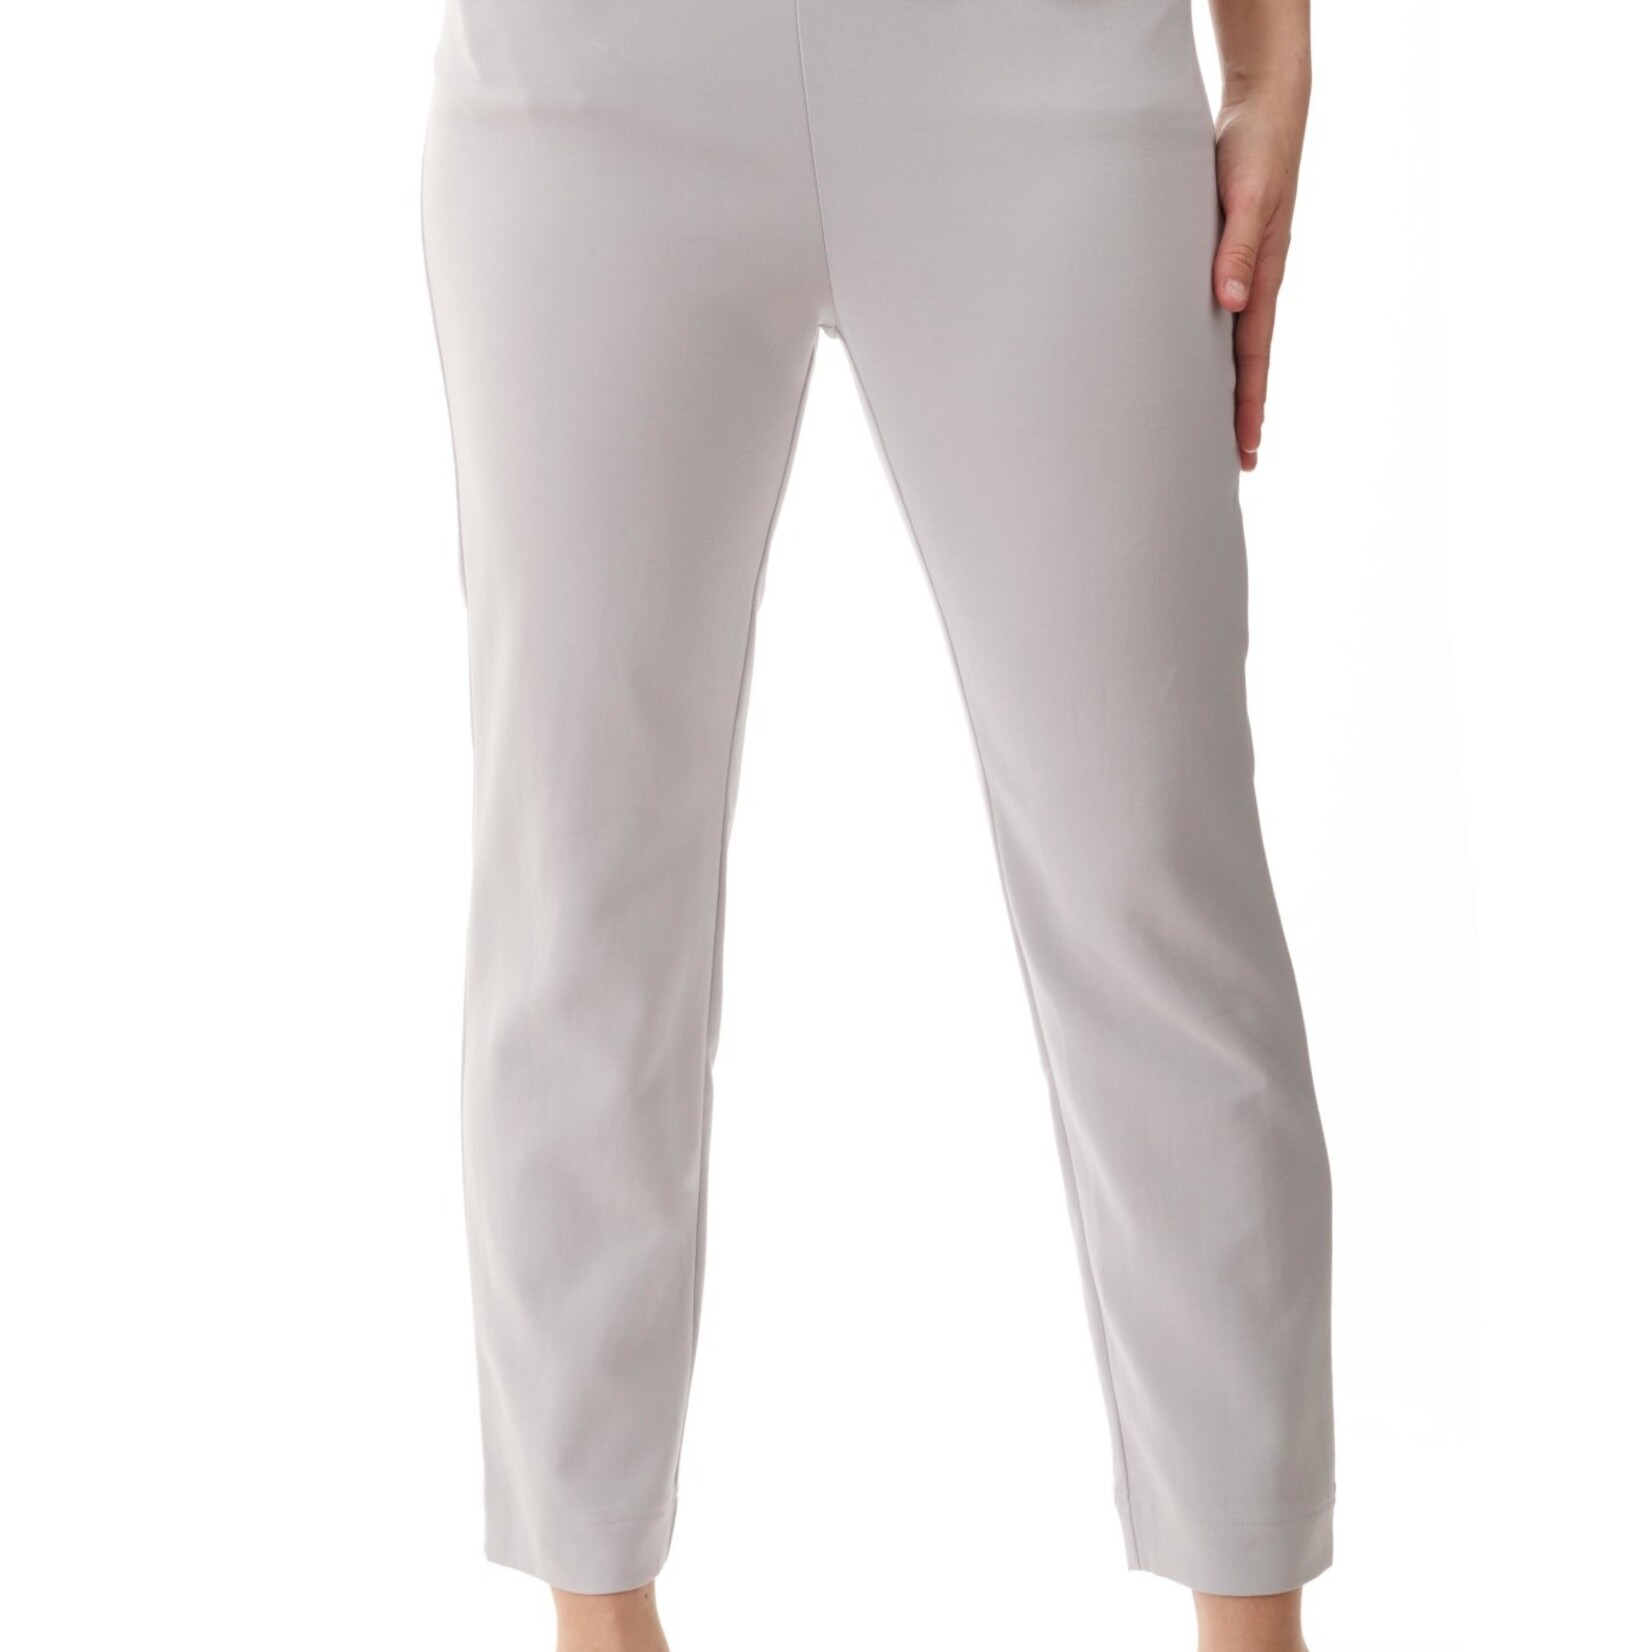 Givoni Silver Cotton Viscose Front Pocket 7/8 Pants